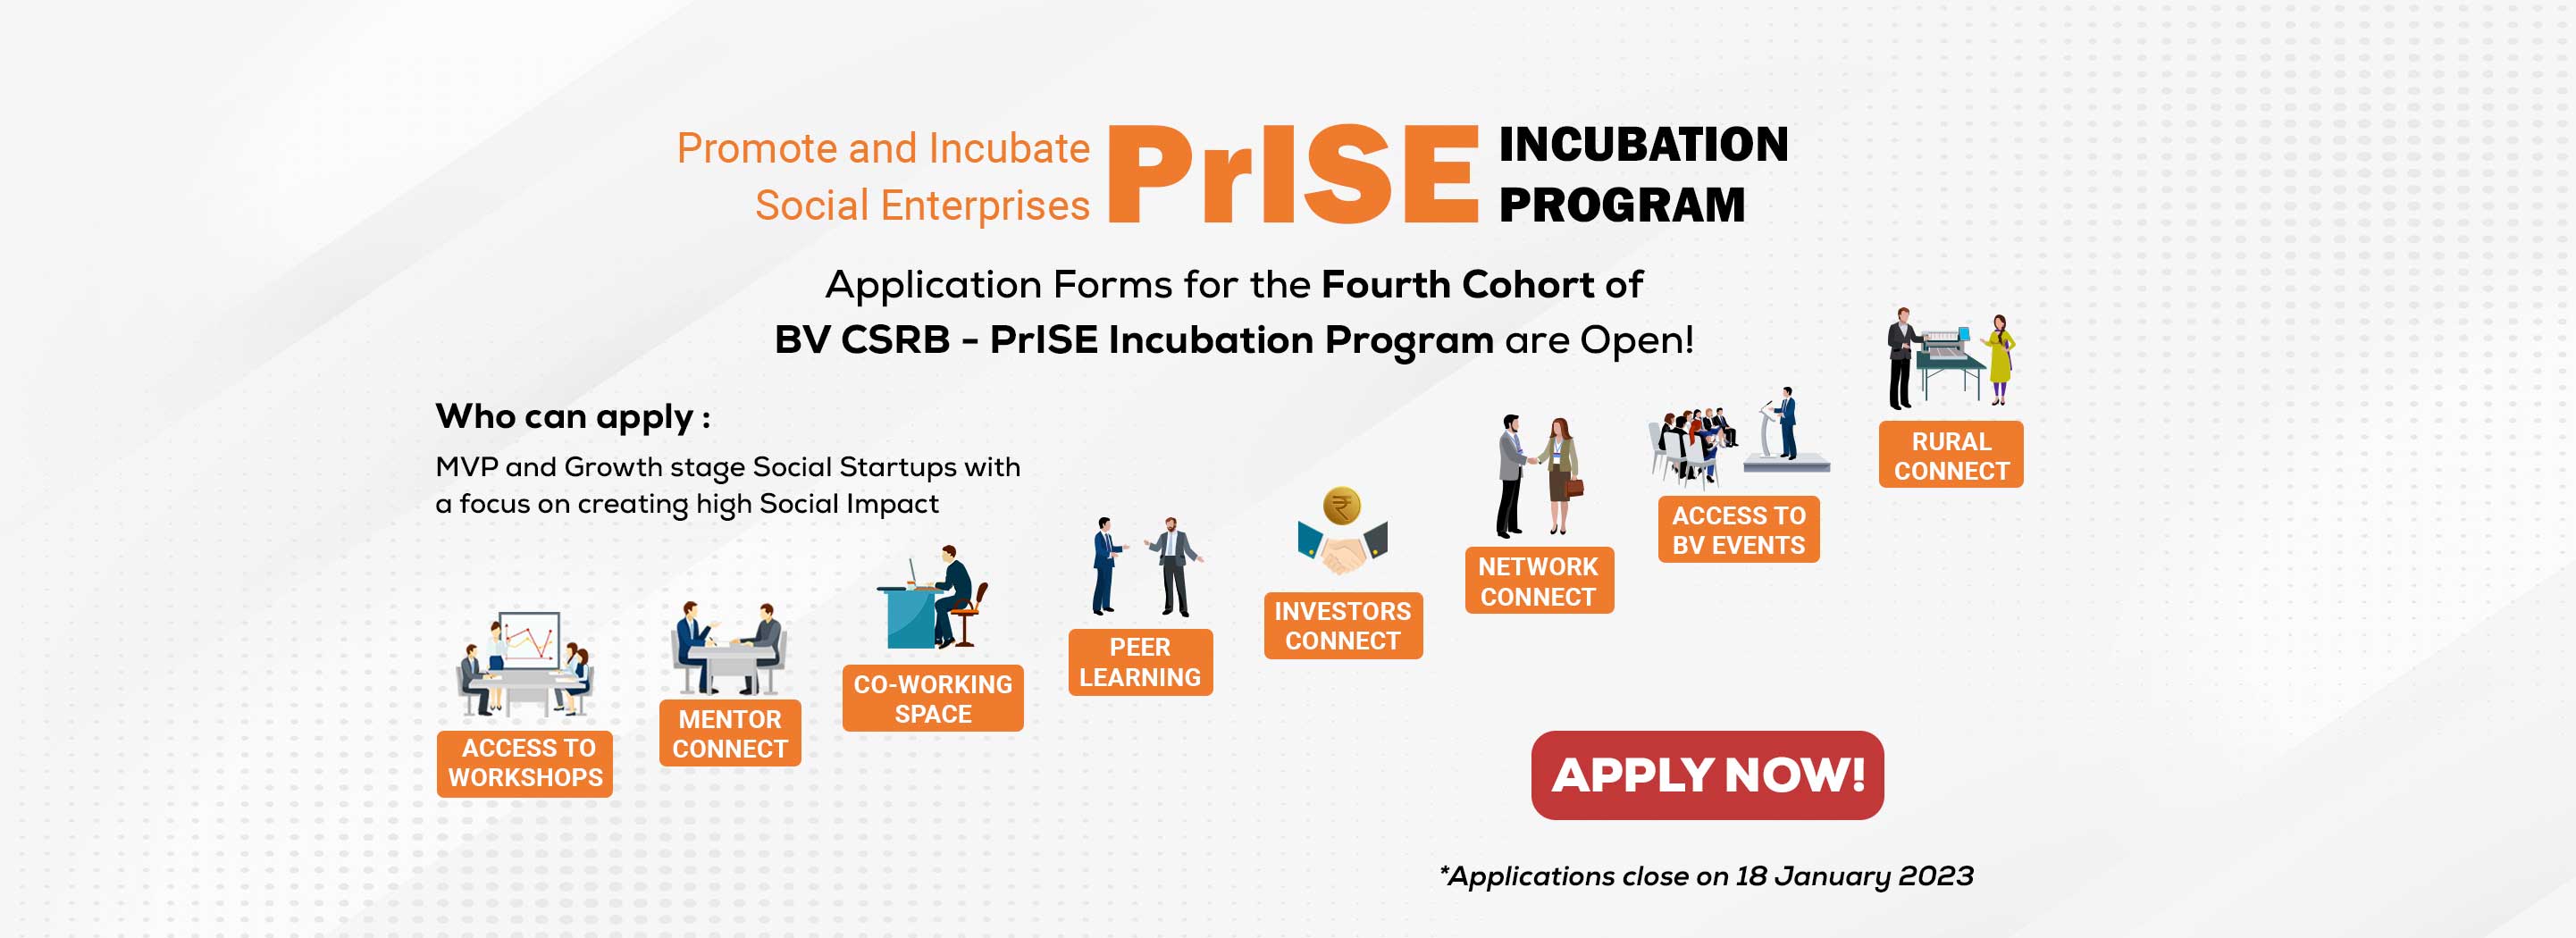 PrISE Incubation Program